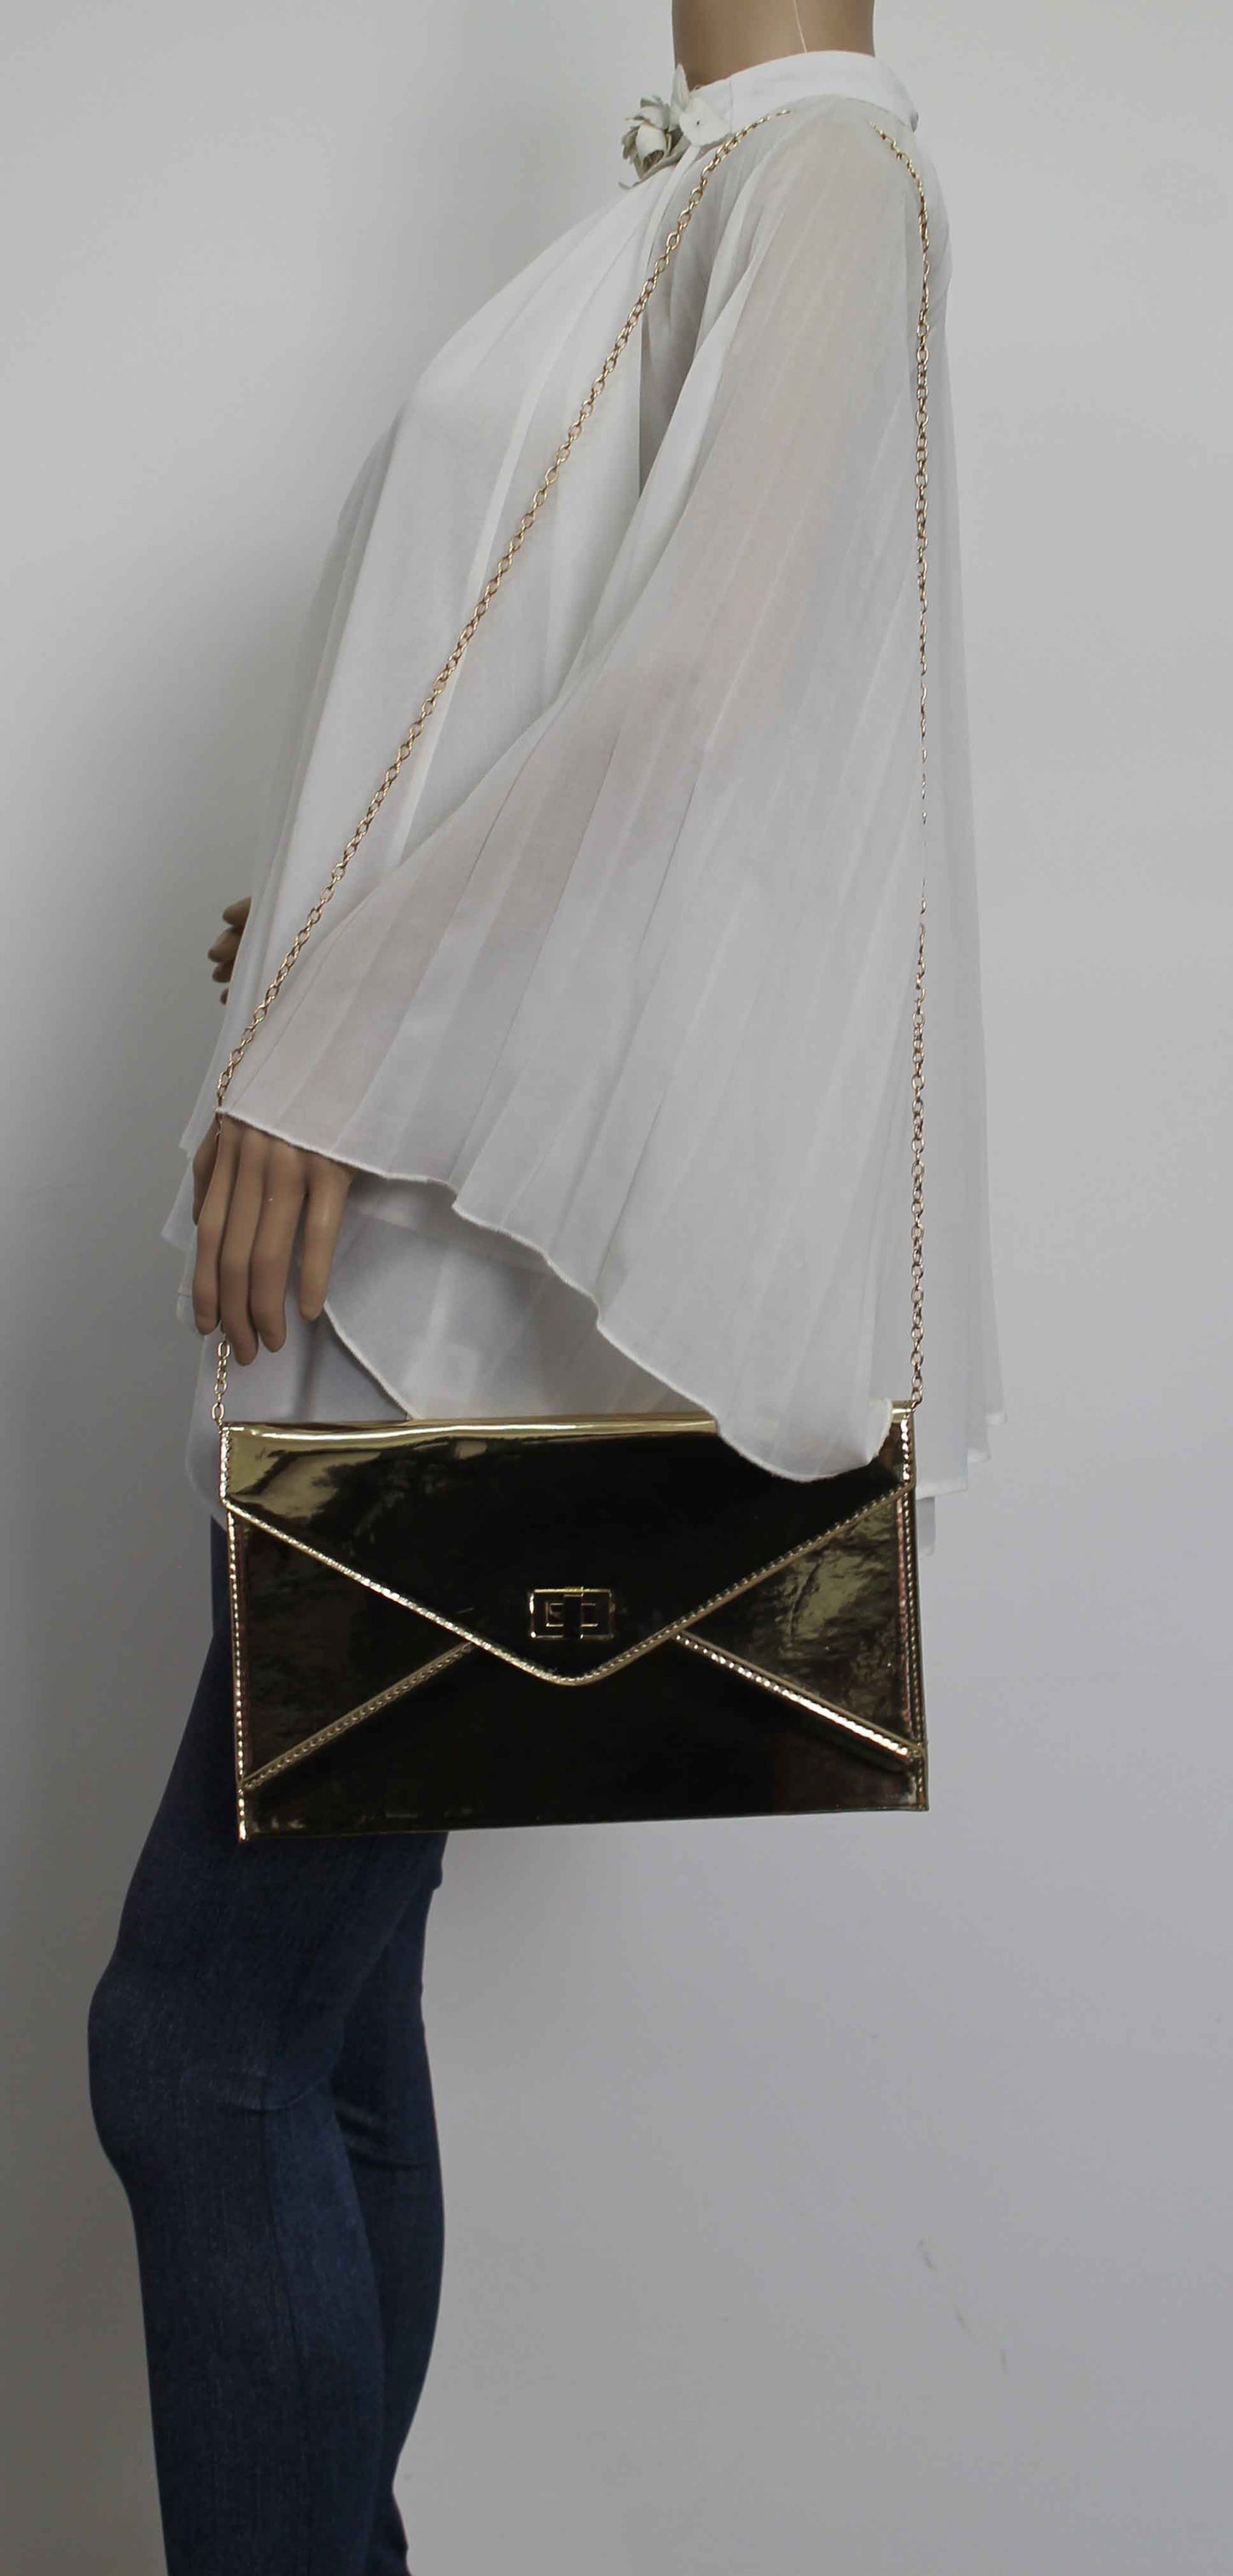 SWANKYSWANS Sarah Envelope Clutch Bag Gold Cute Cheap Clutch Bag For Weddings School and Work